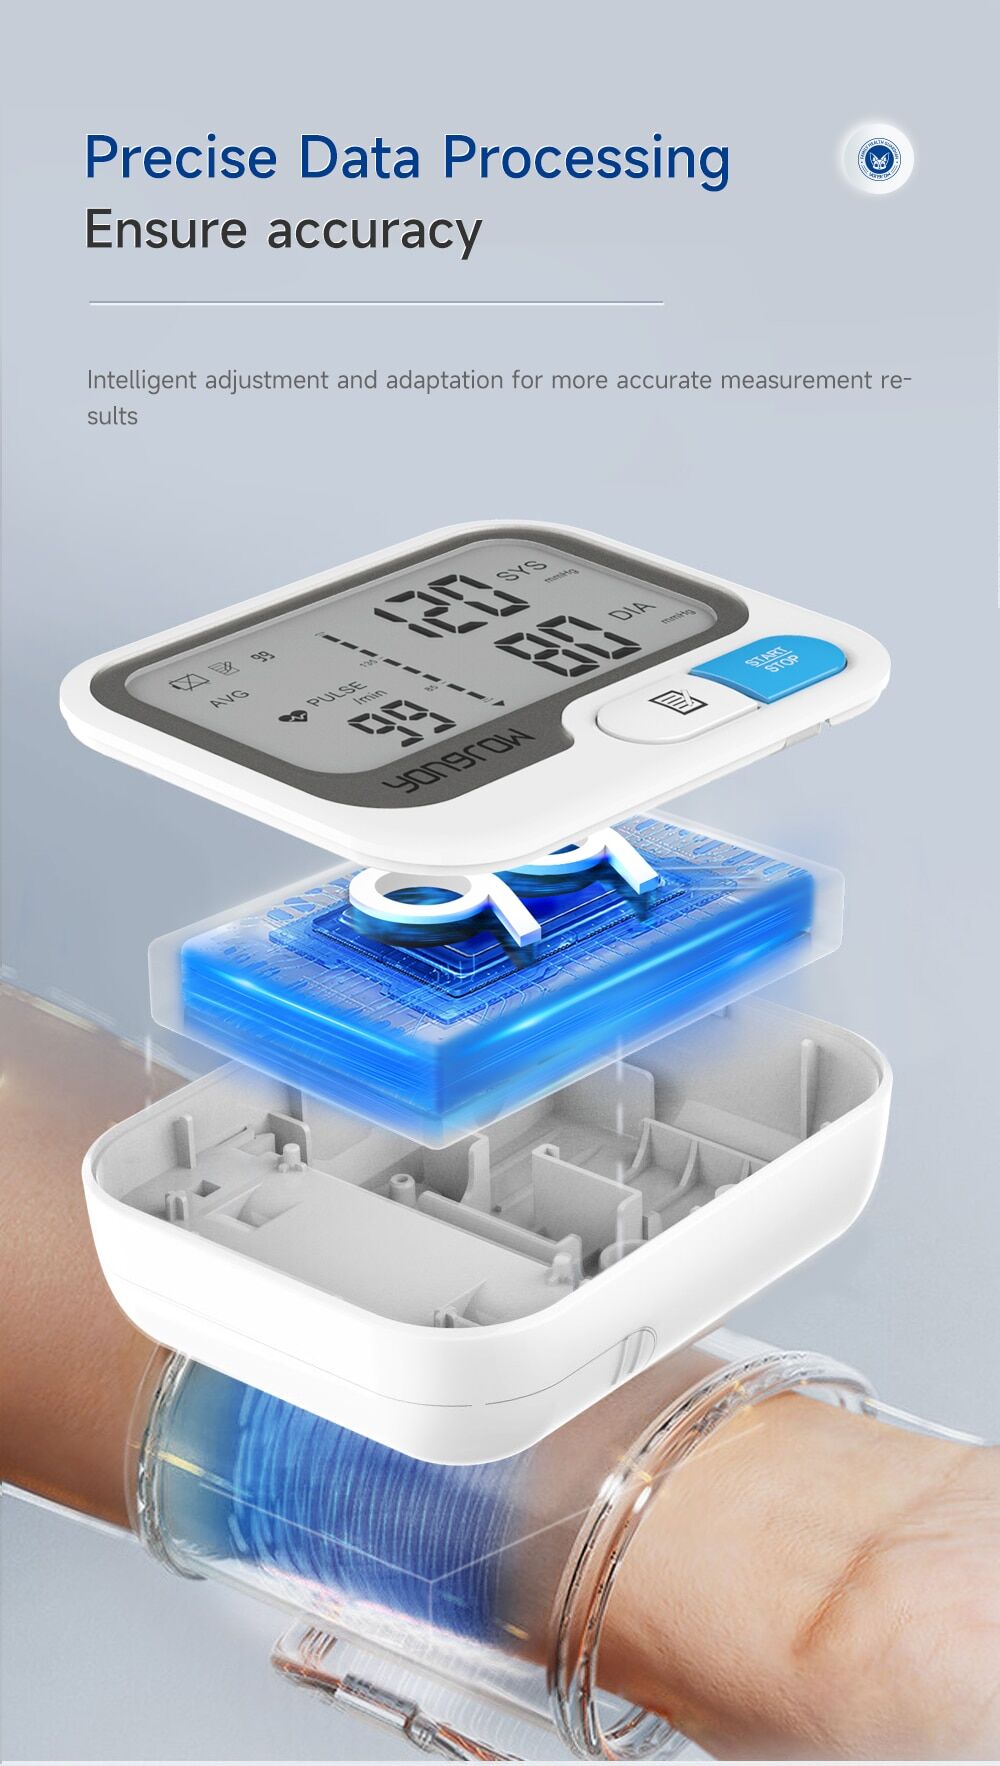 Digital wrist blood pressure monitor Yongrow YK-BPW5 € 32,44